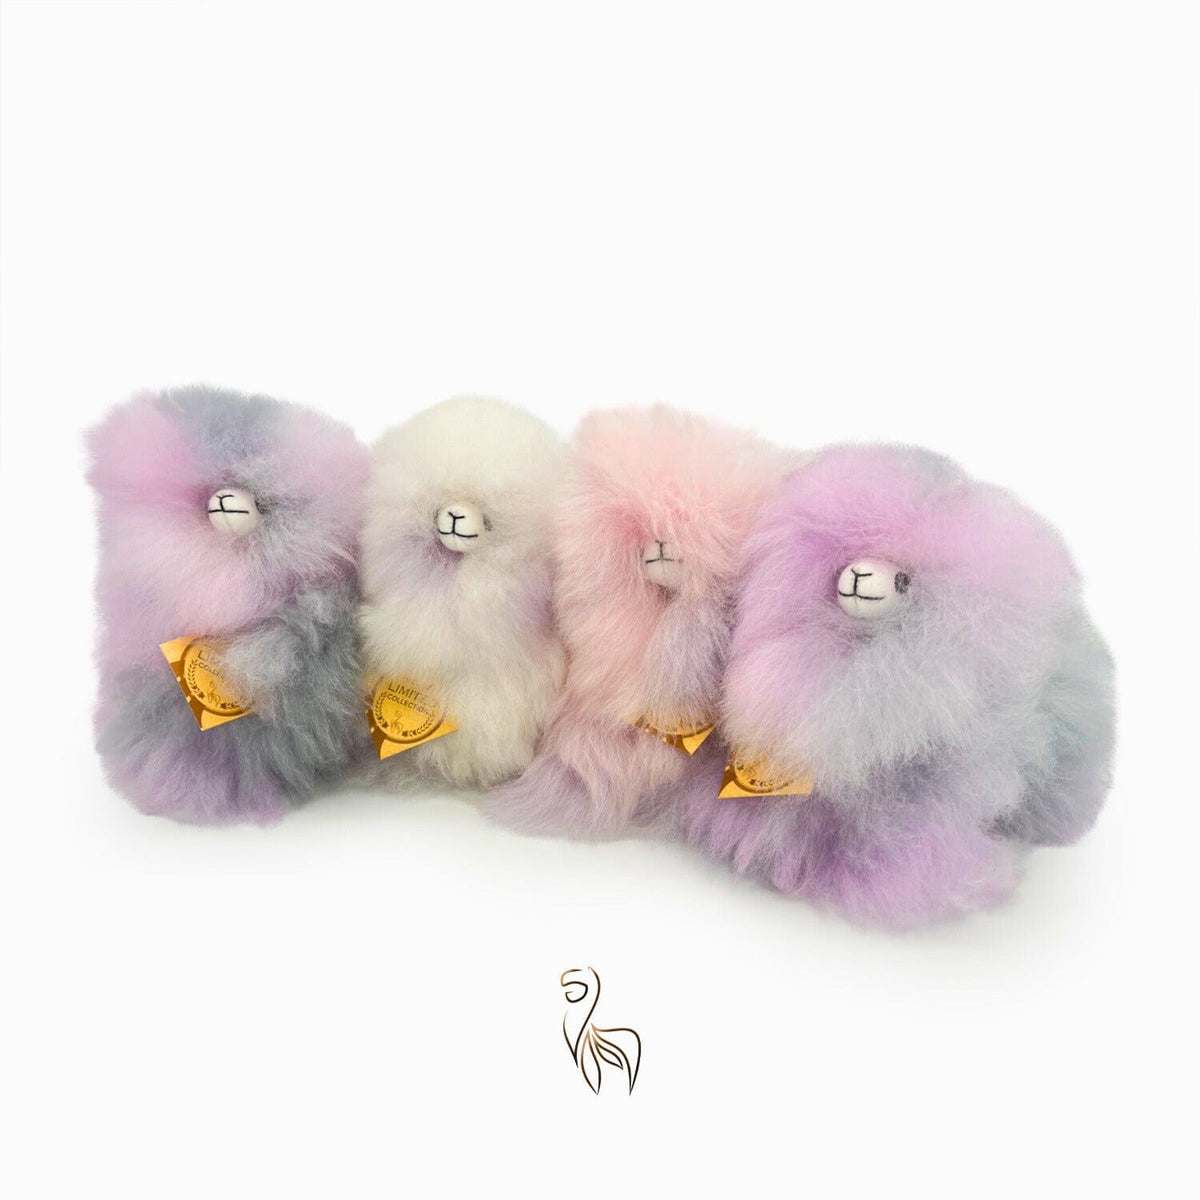 Monsterfluff Cupid - Mini Alpaca Toy (15cm) - Limited Edition